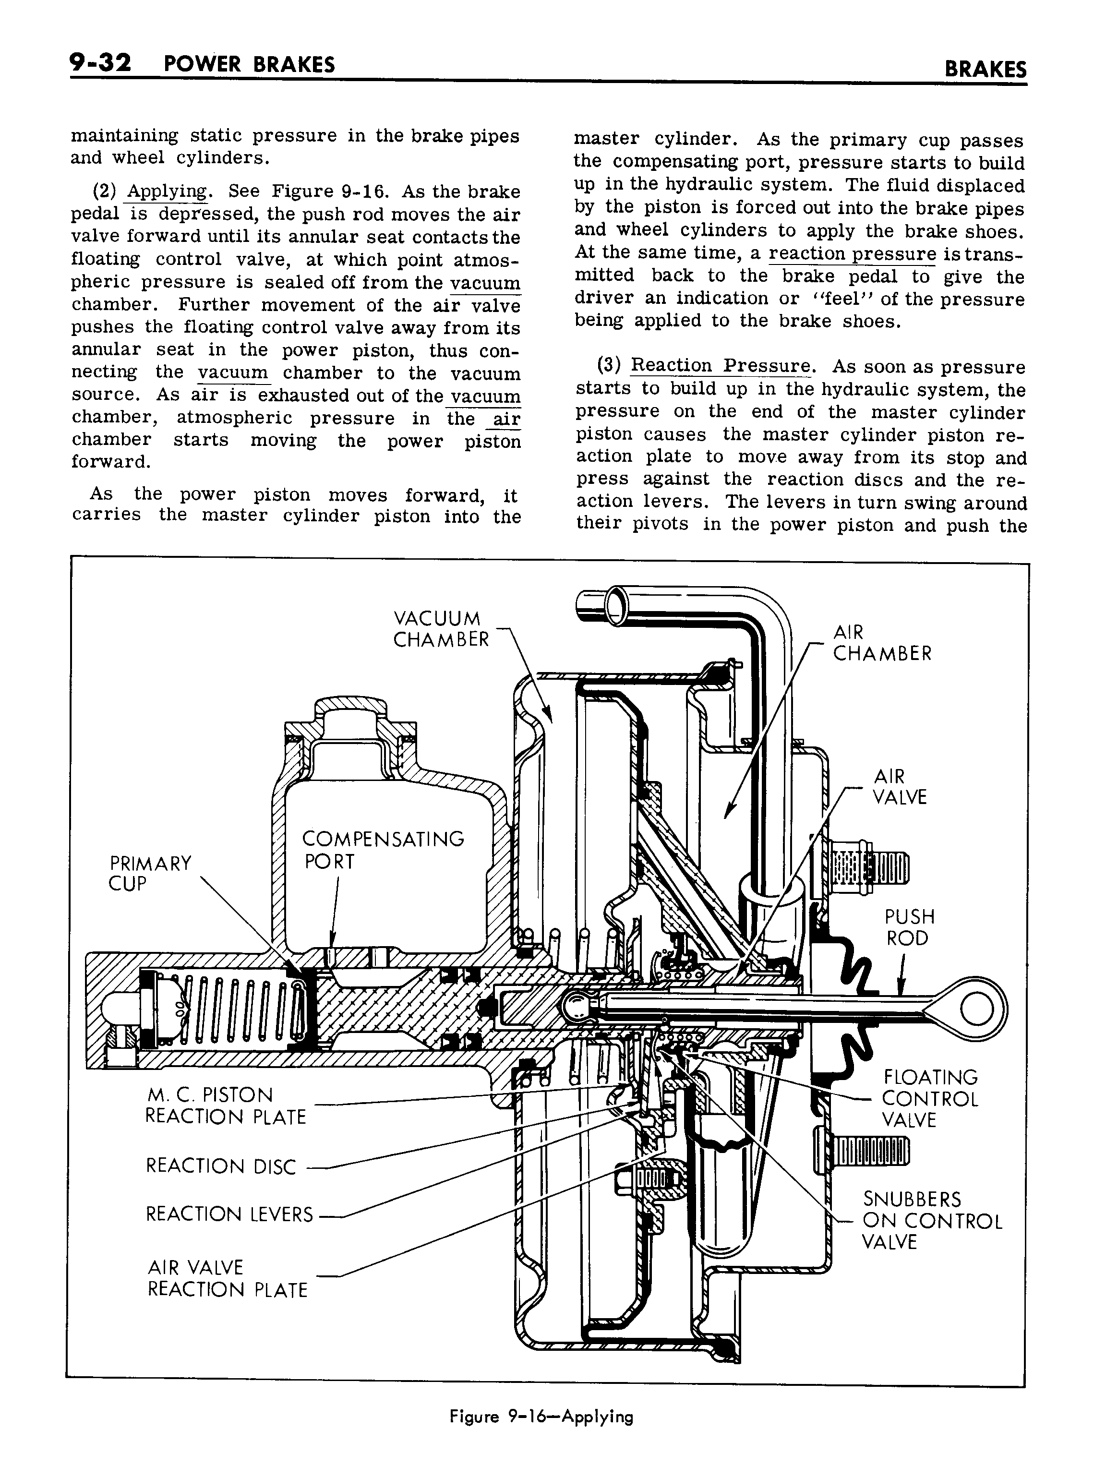 n_09 1961 Buick Shop Manual - Brakes-032-032.jpg